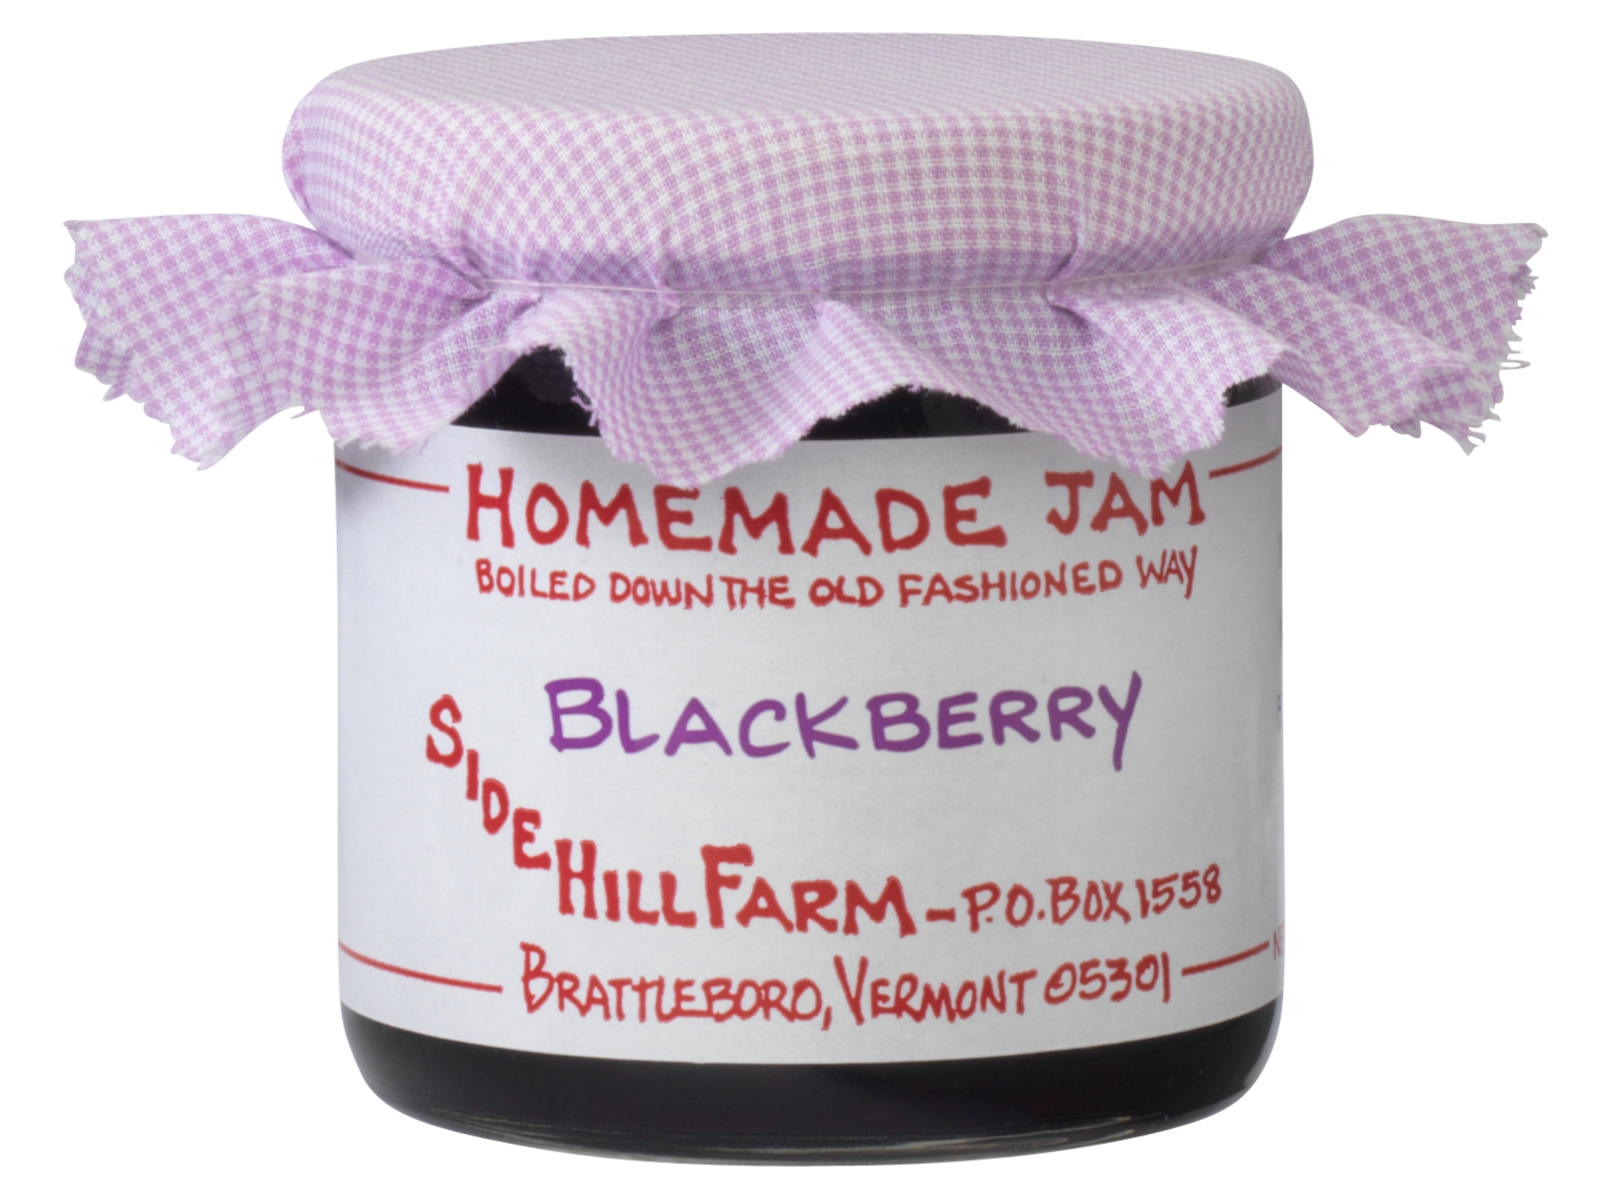 Sidehill Farm Blackberry Jam